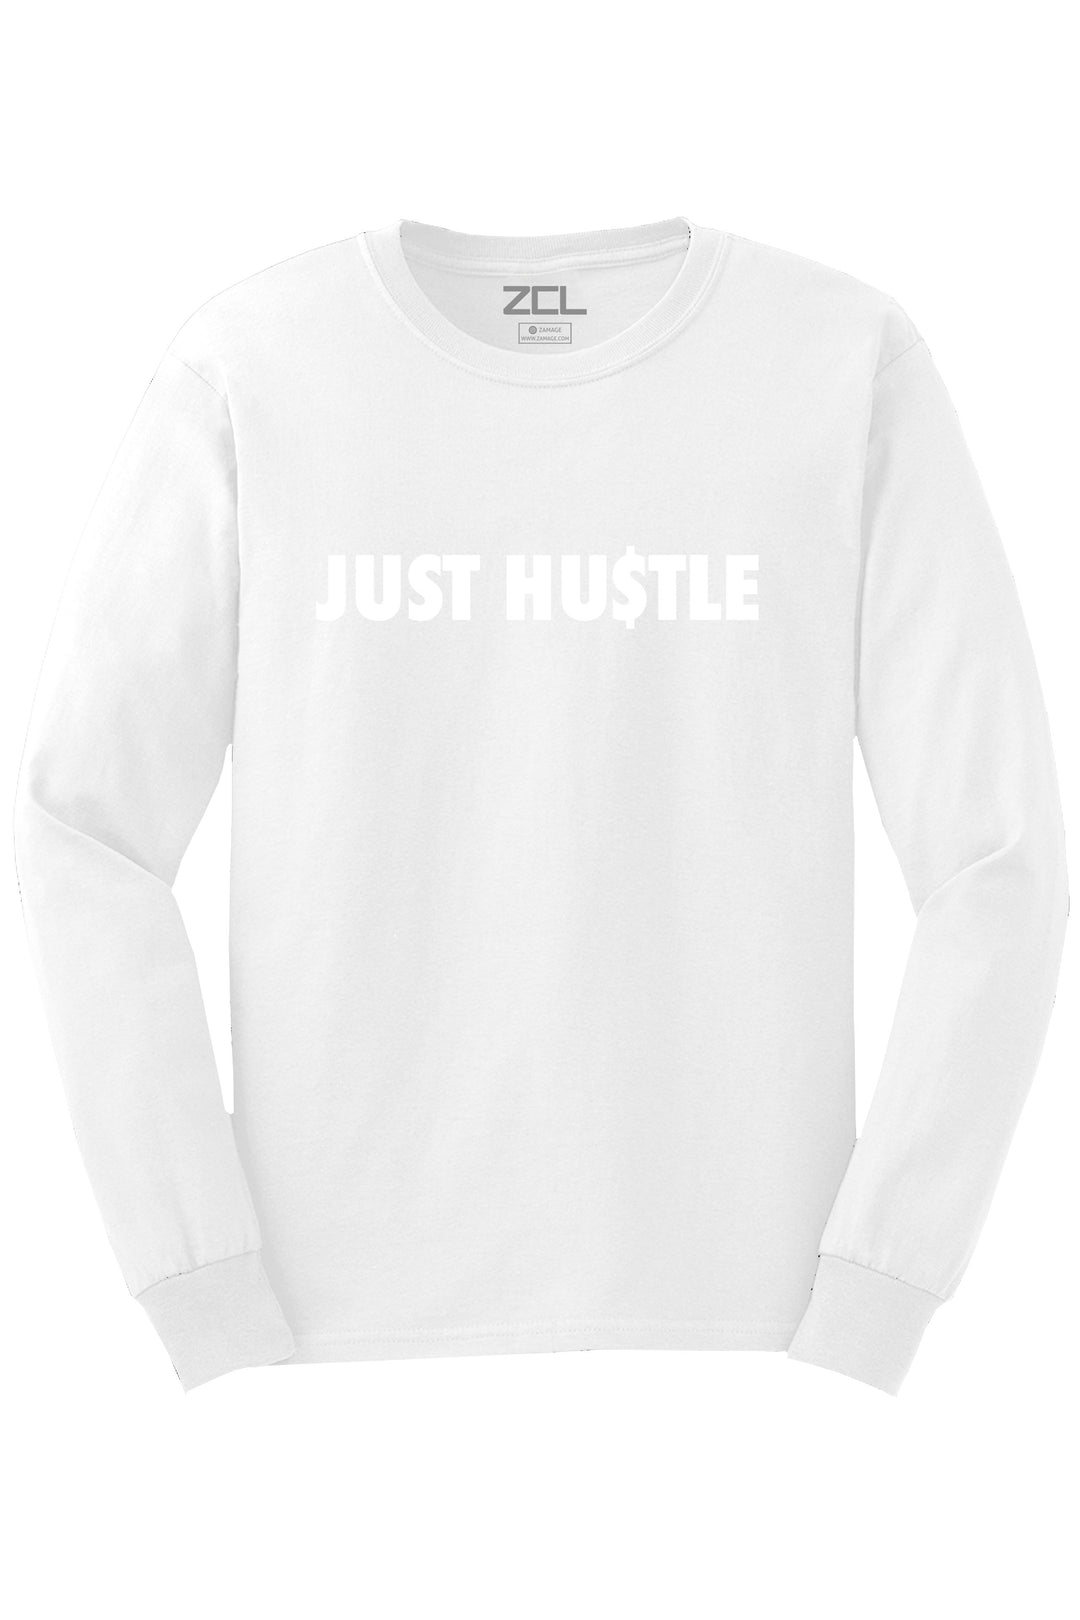 Just Hu$tle Long Sleeve Tee (White Logo) - Zamage